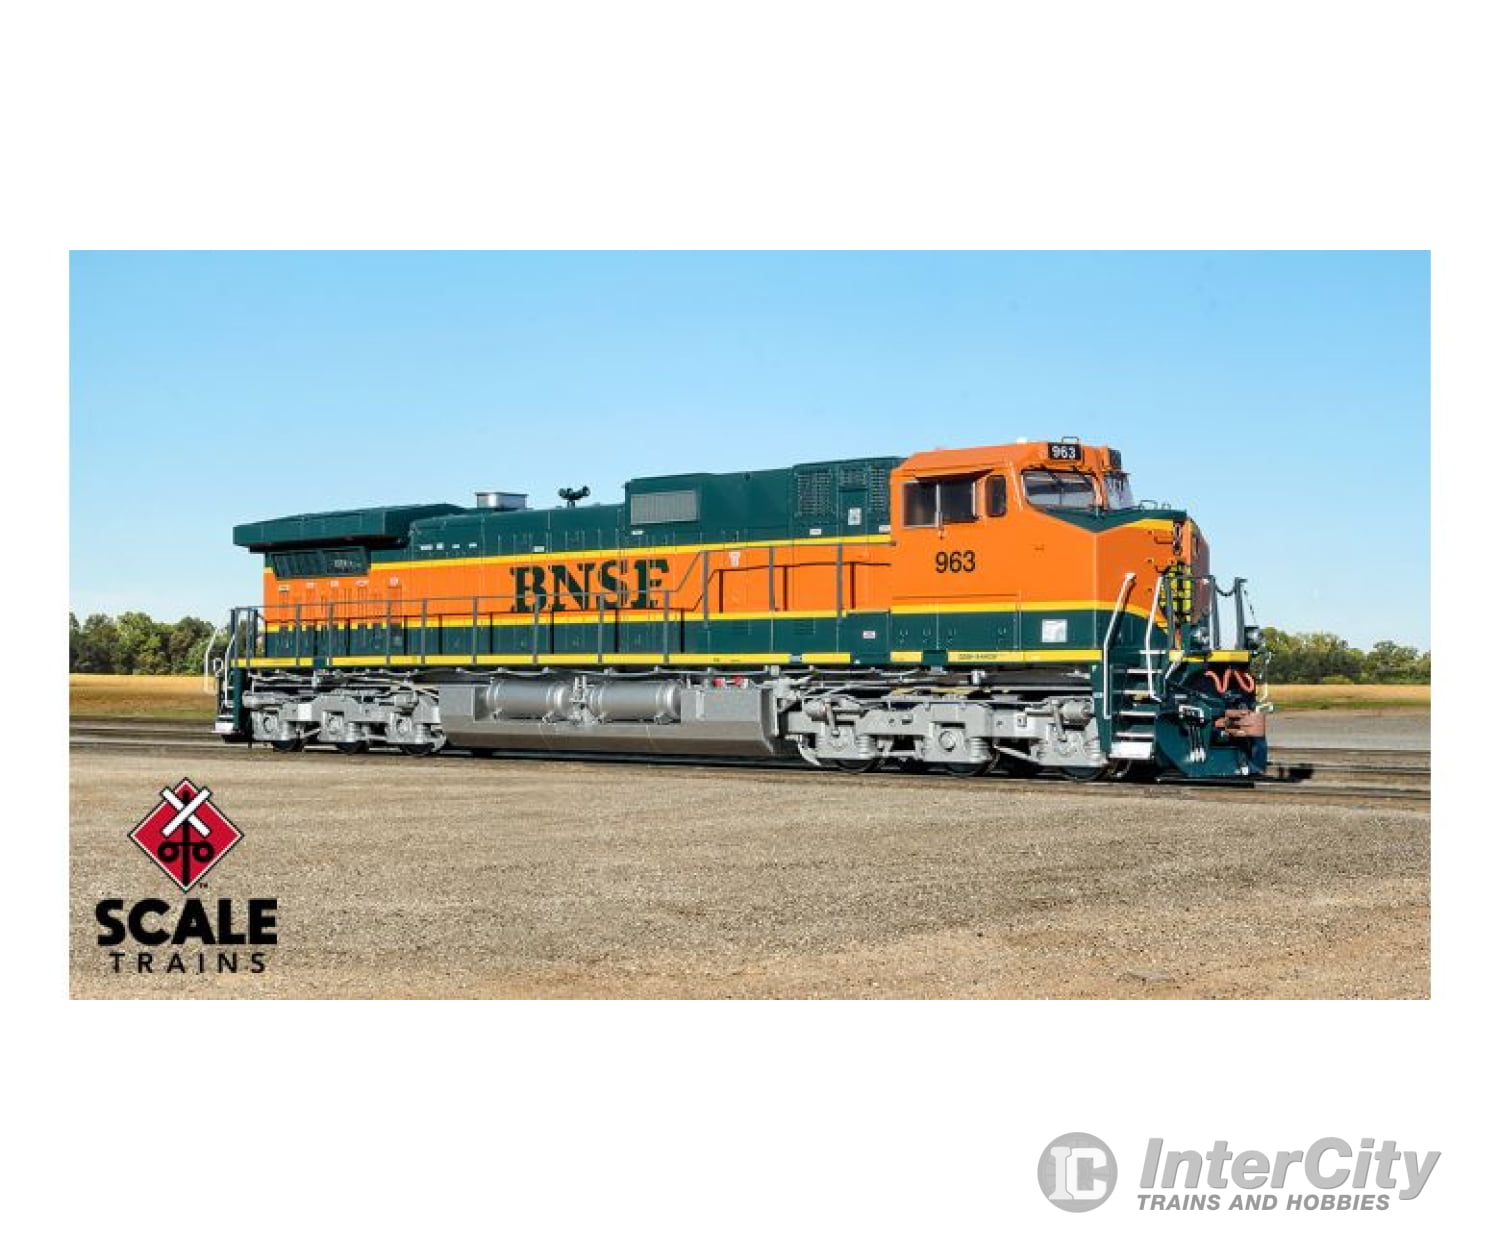 Scale Trains Sxt33442 Rivet Counter Ho Ge Dash-9 Bnsf/Heritage I Dcc & Sound Rd# 970 Locomotives